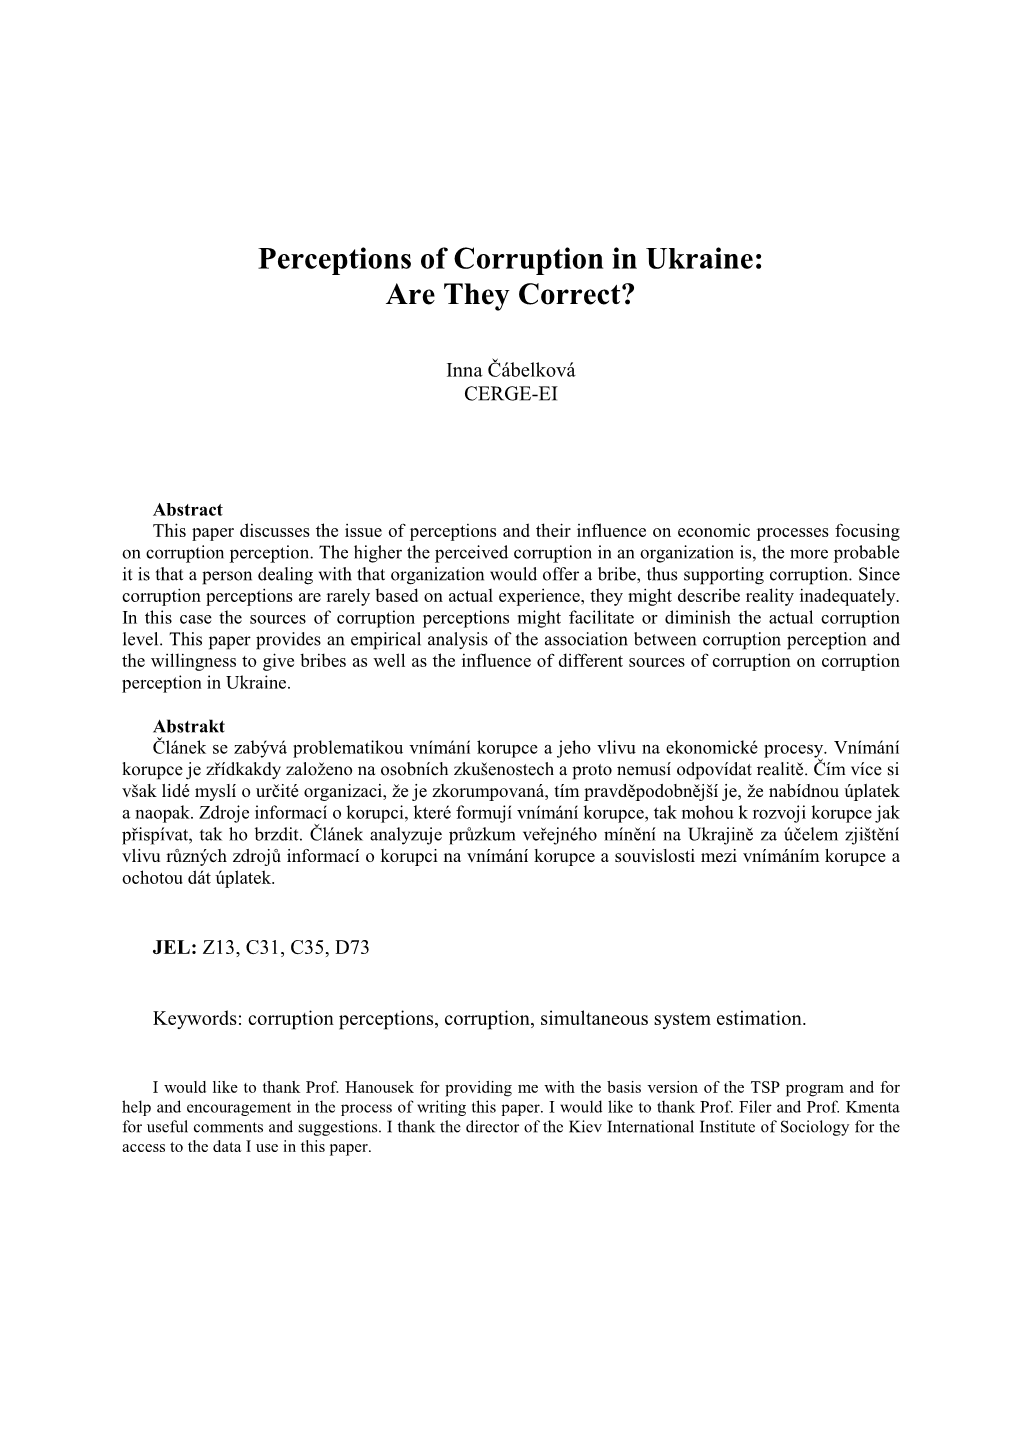 Perceptions of Corruption in Ukraine: Are They Correct?